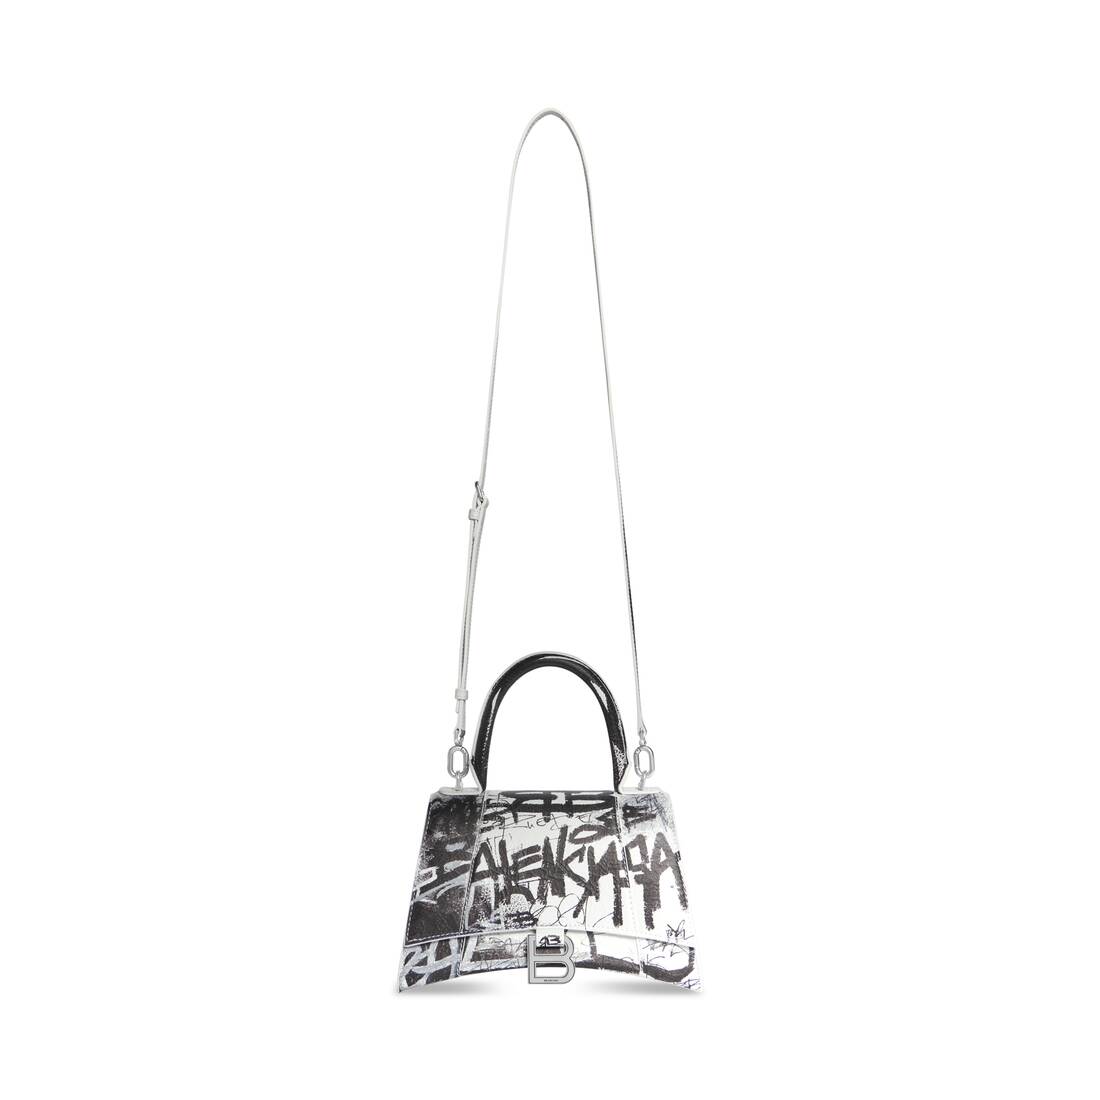 Balenciaga Women's Hourglass Small Graffiti Handbag